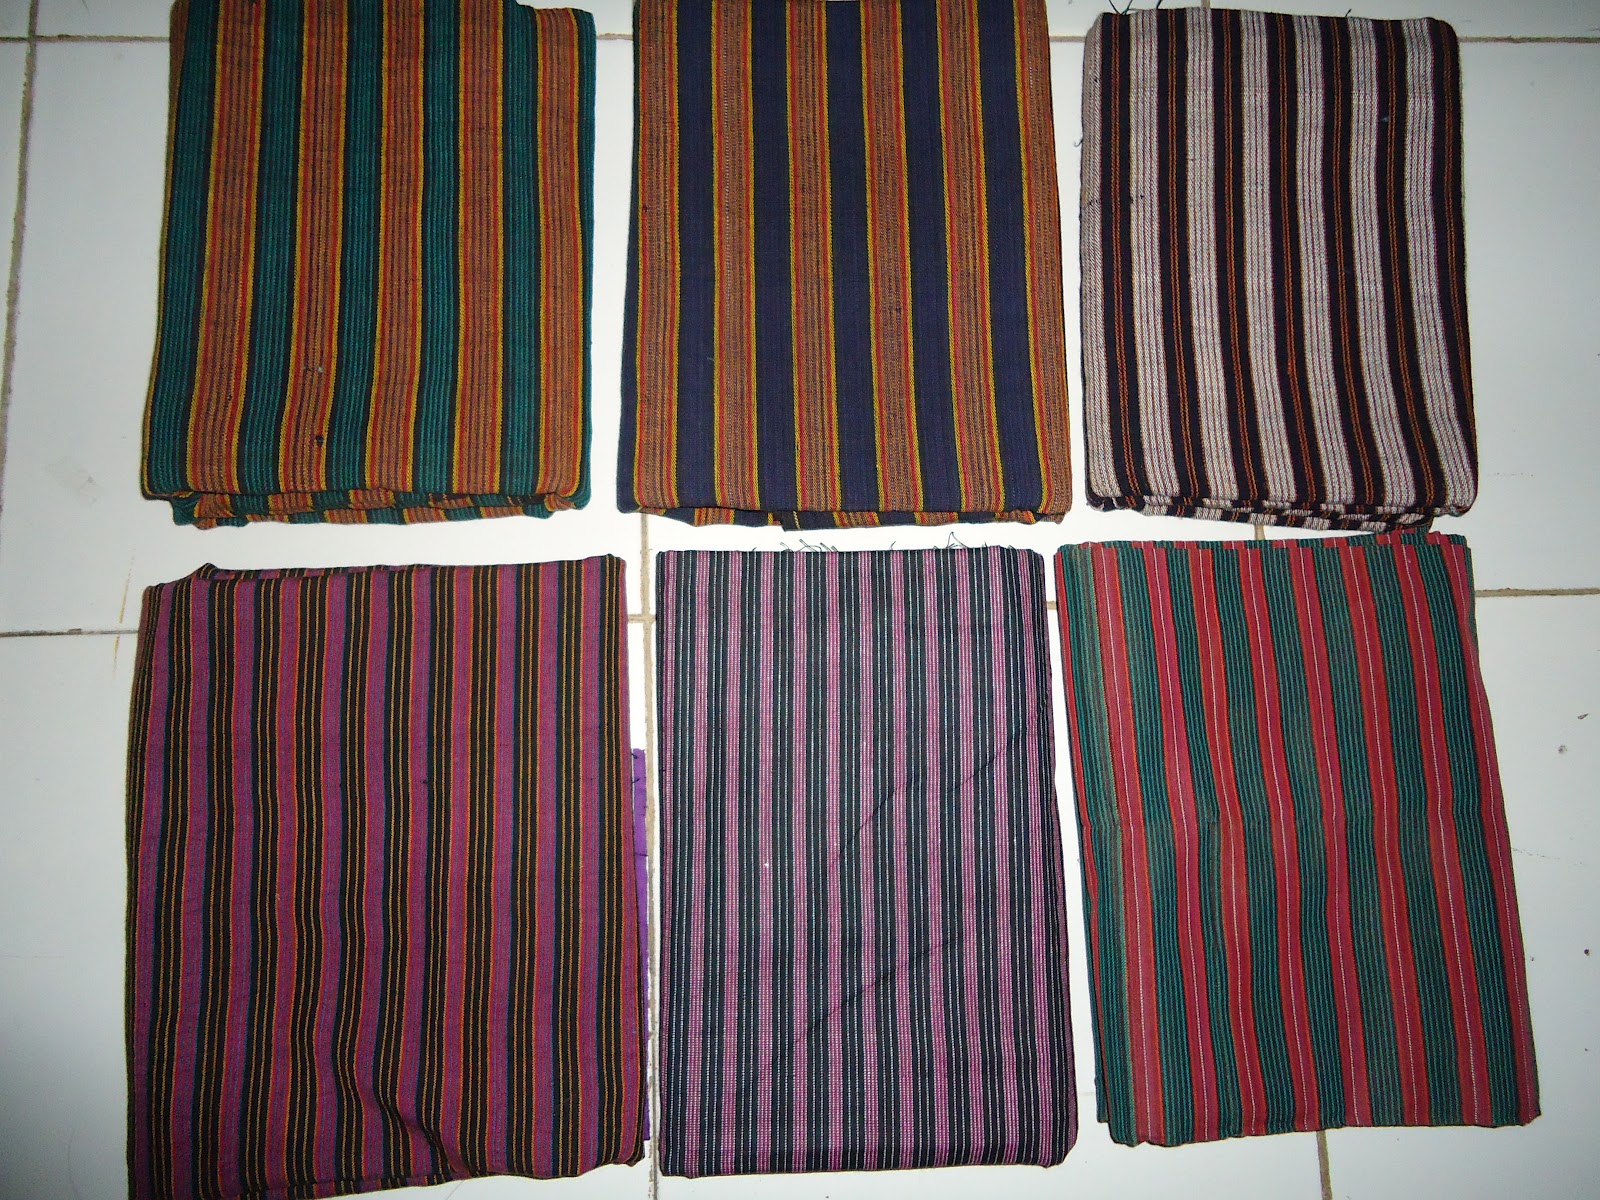  Lurik  Kain  Tenun  Pulau Jawa  Textile Fashion and Pattern